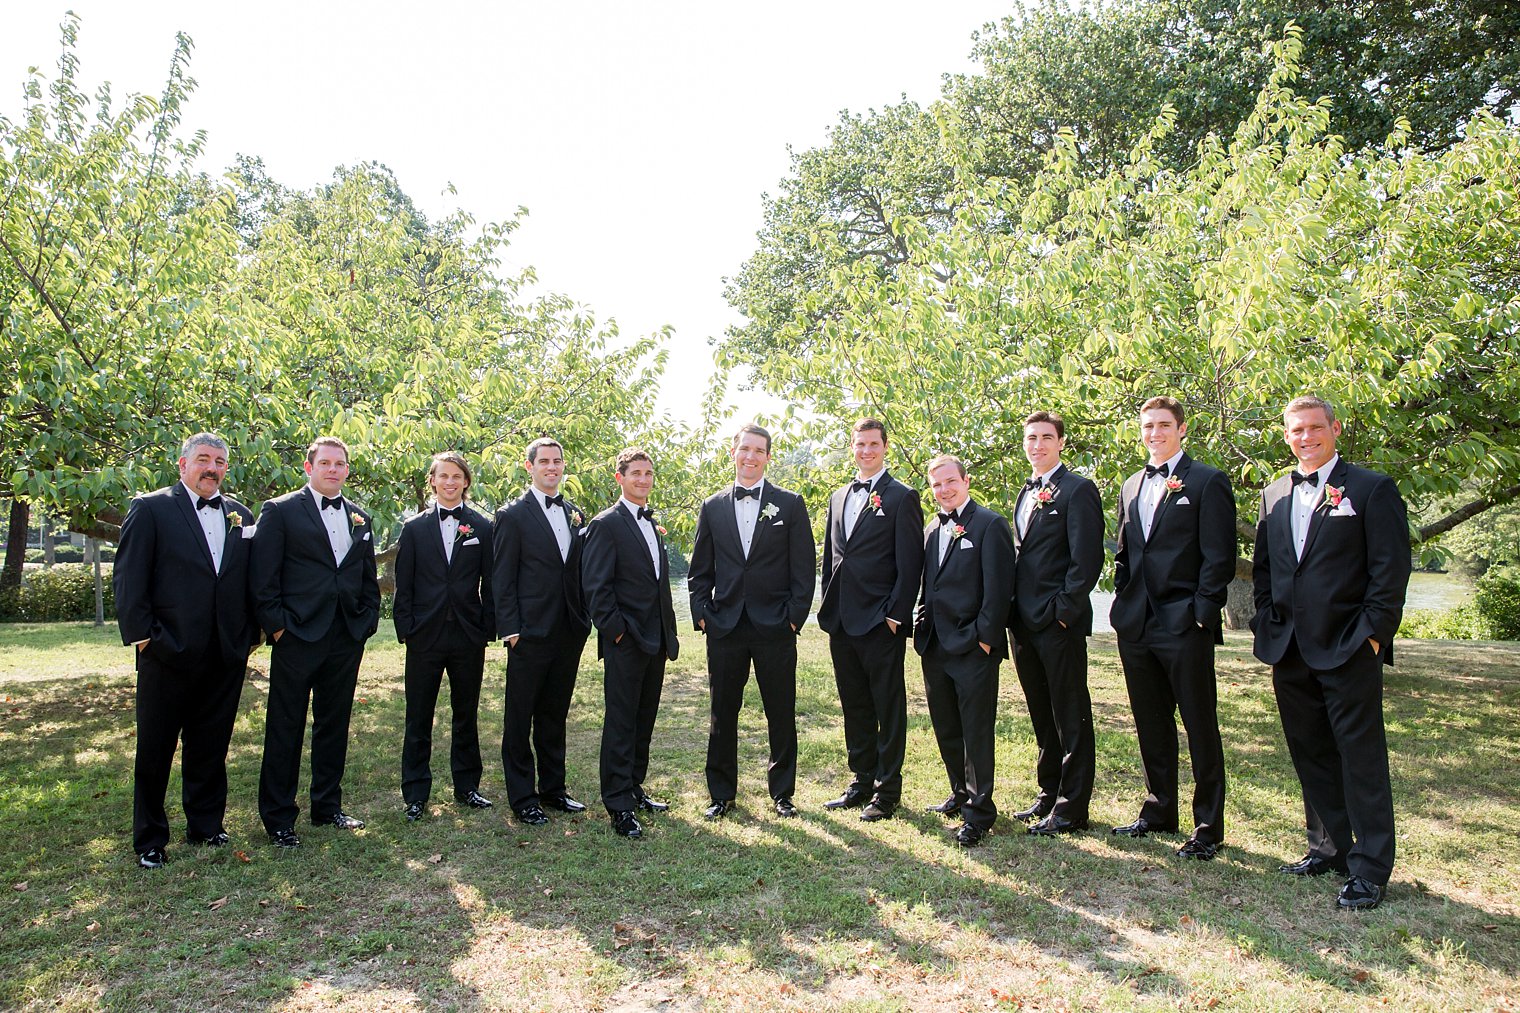 groomsmen-in-tuxedos